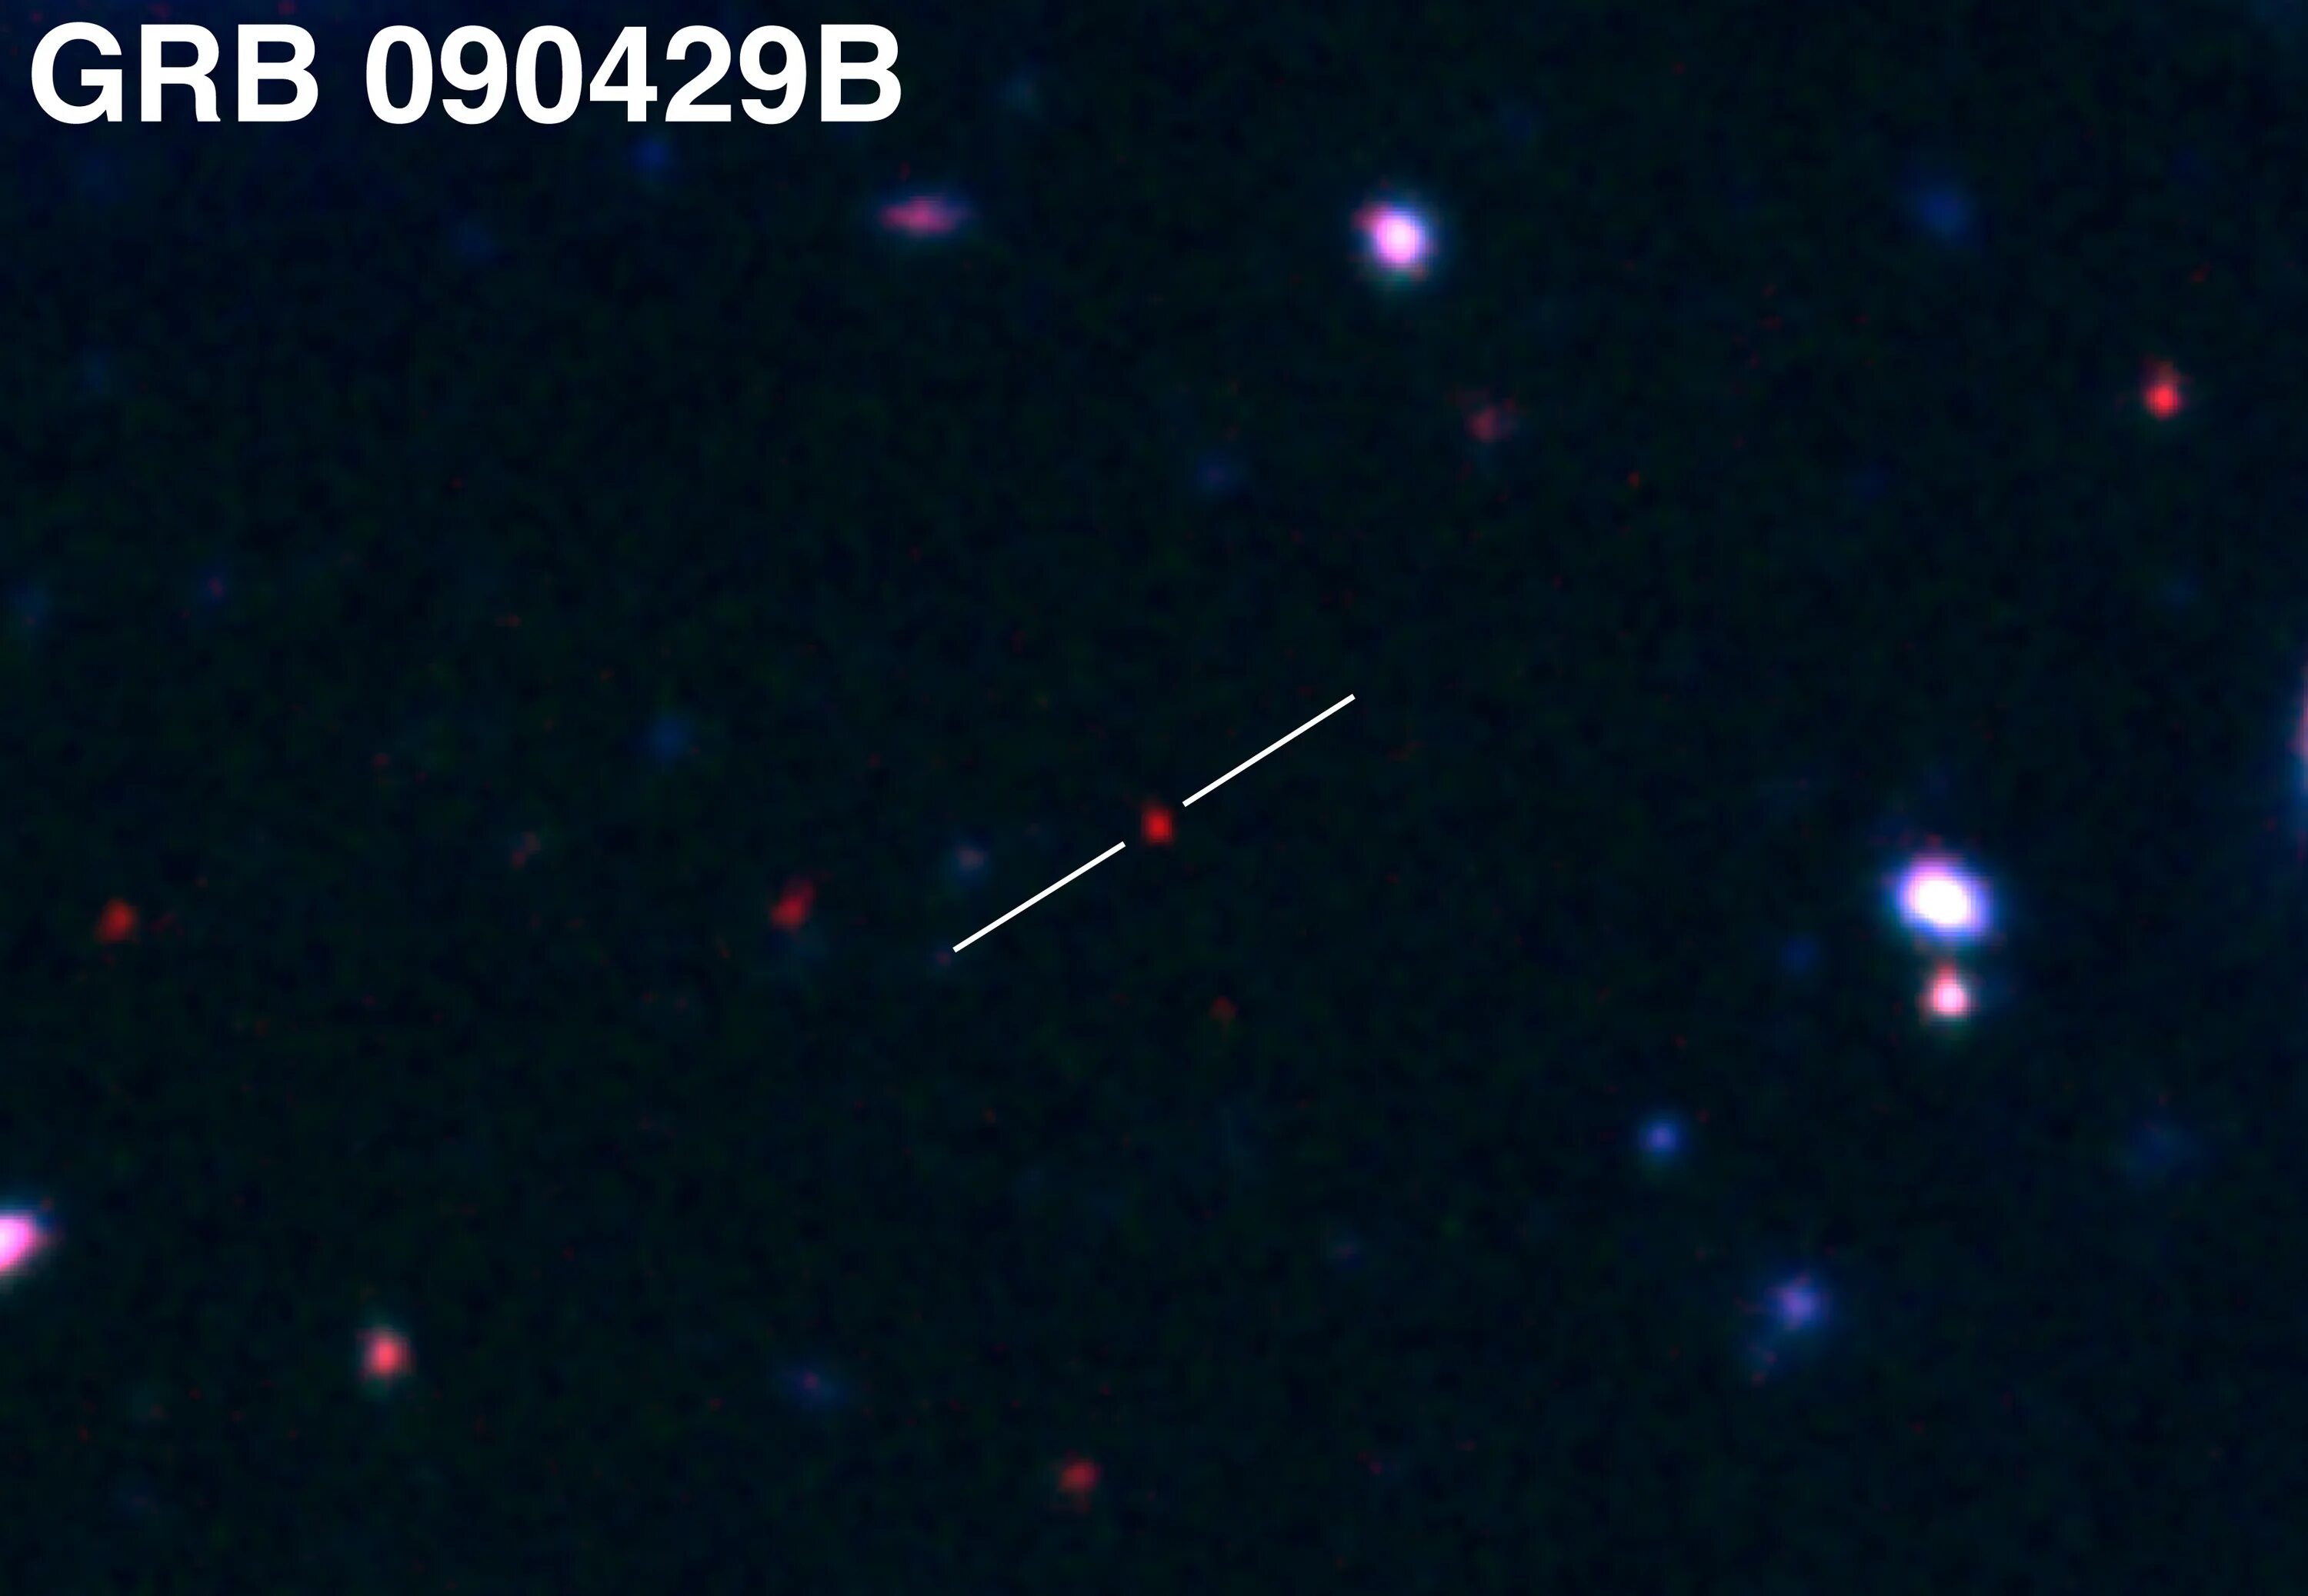 Самый далекий объект. Самый Дальний объект в космосе. Самая Дальняя звезда. Самая далекая точка в космосе. GRB 090429b звезда.